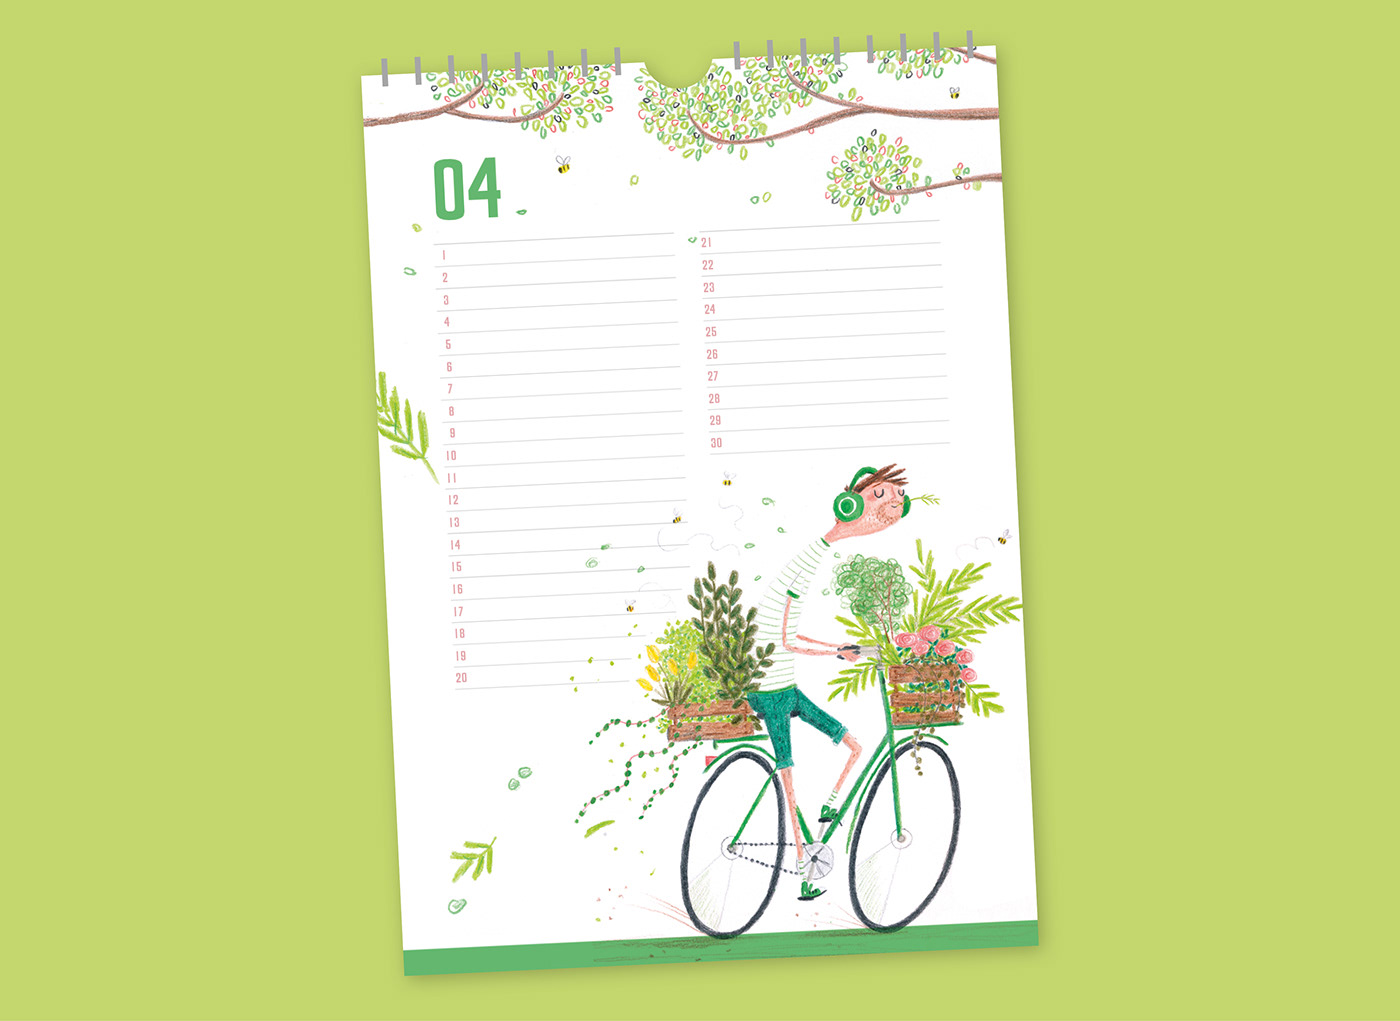 amsterdam bicycling bikes biking illustration calendar character illustration cyclists handdrawn Pencil illustration perpetual calendar